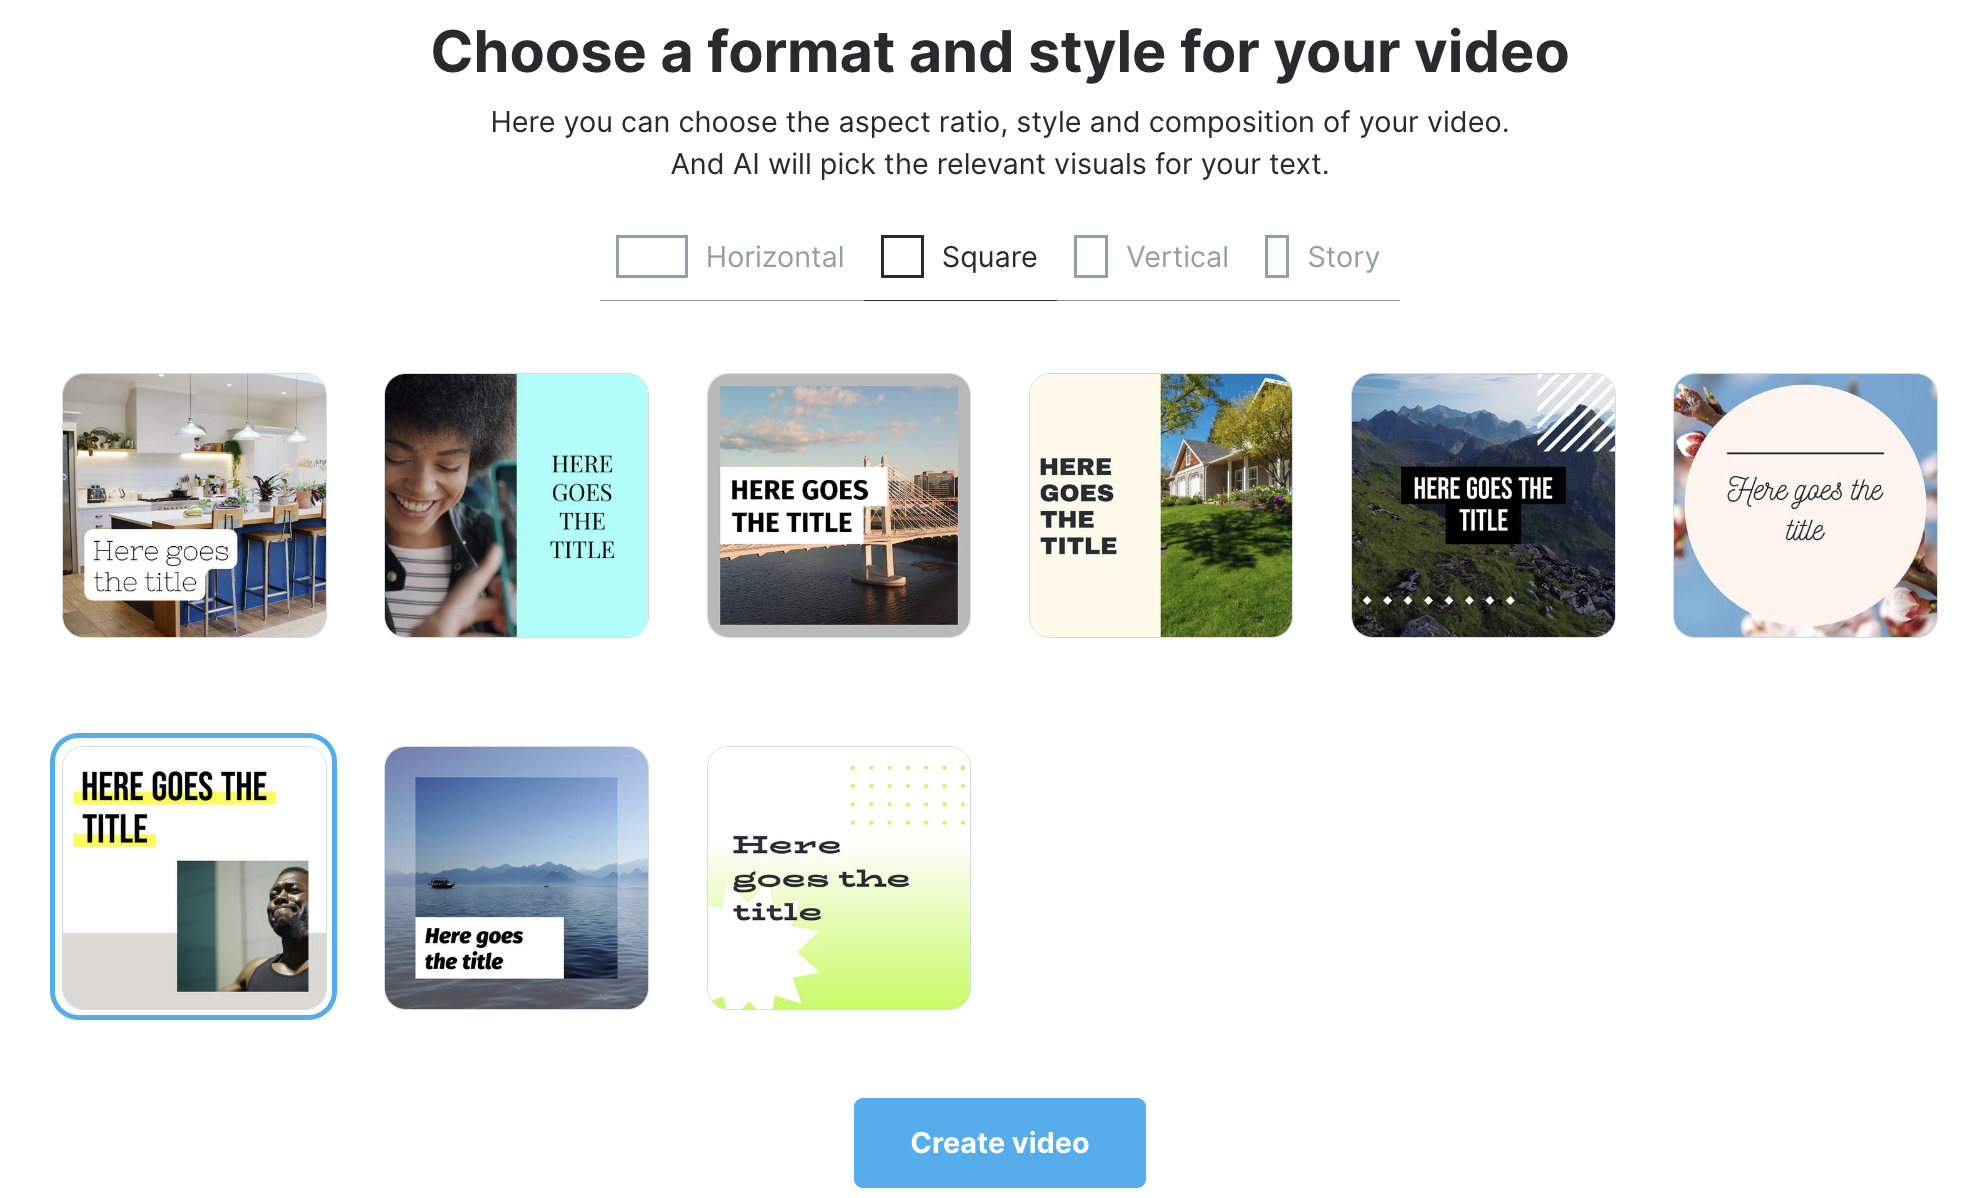 Video Marketing Platform provides multiple video template options.